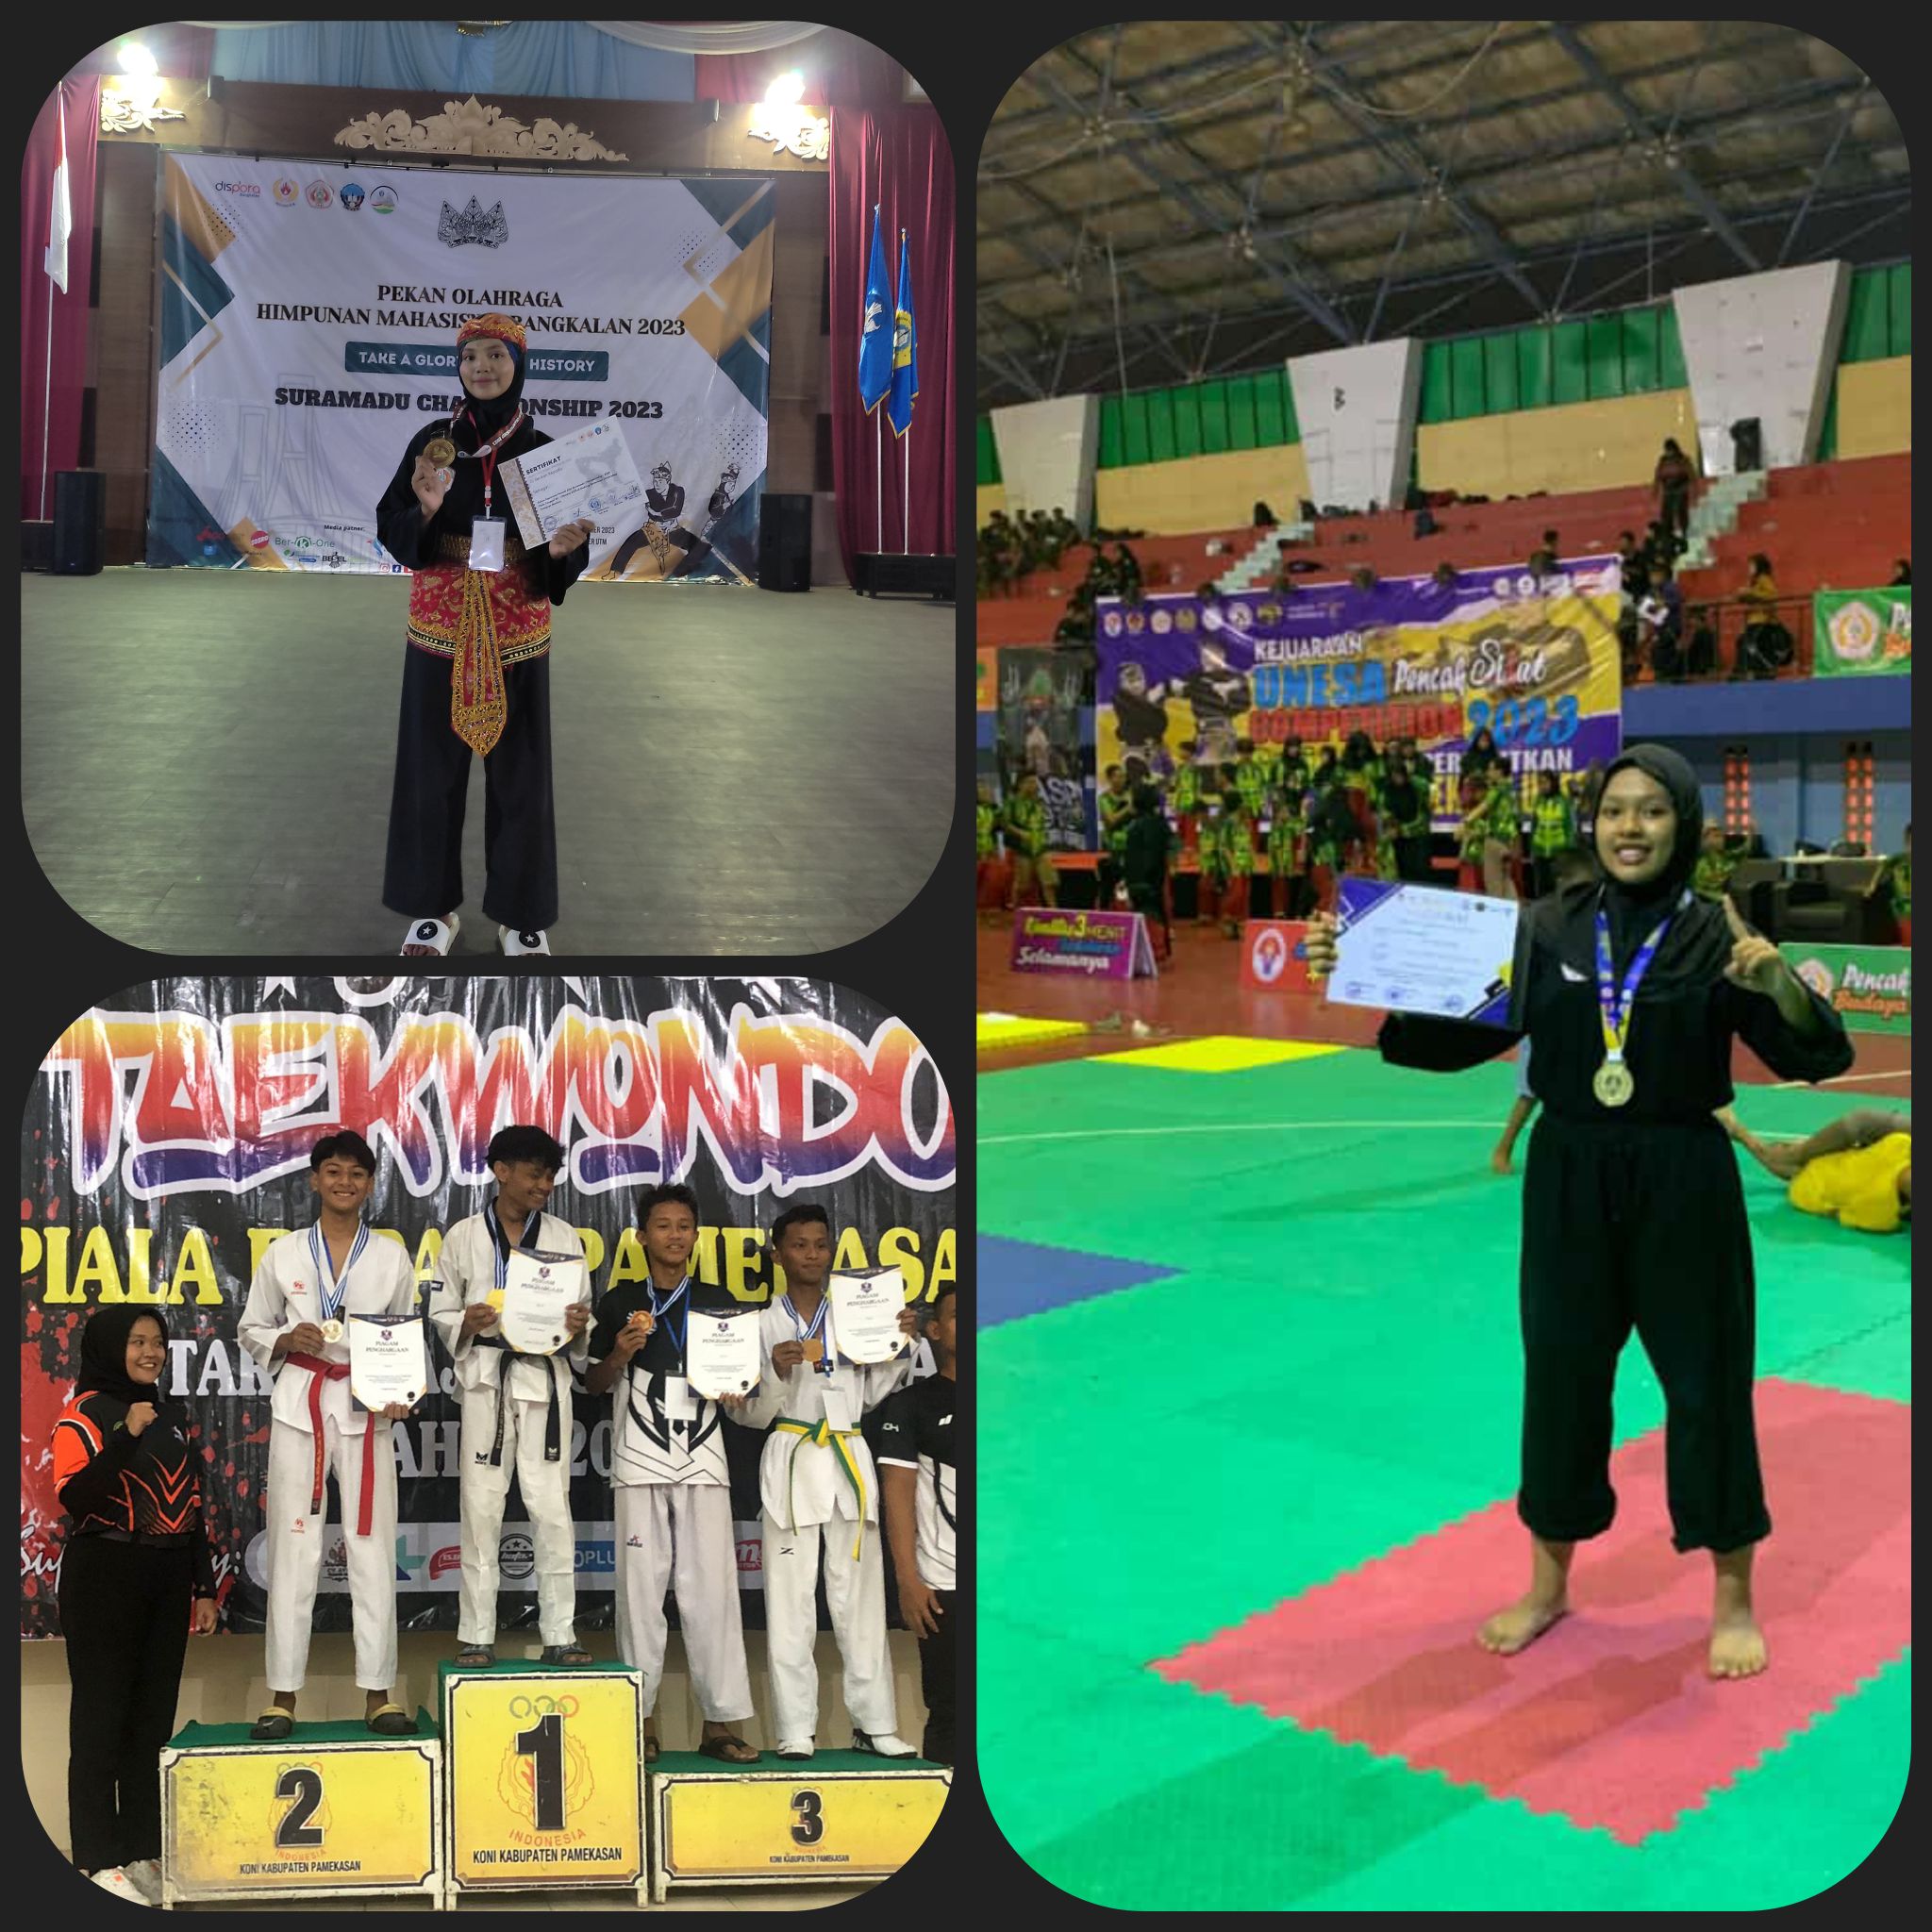 Prestasi siswa siswi SMA Negeri 1 bangkalan dalam cabang olahraga pencak silat dan taekwondo